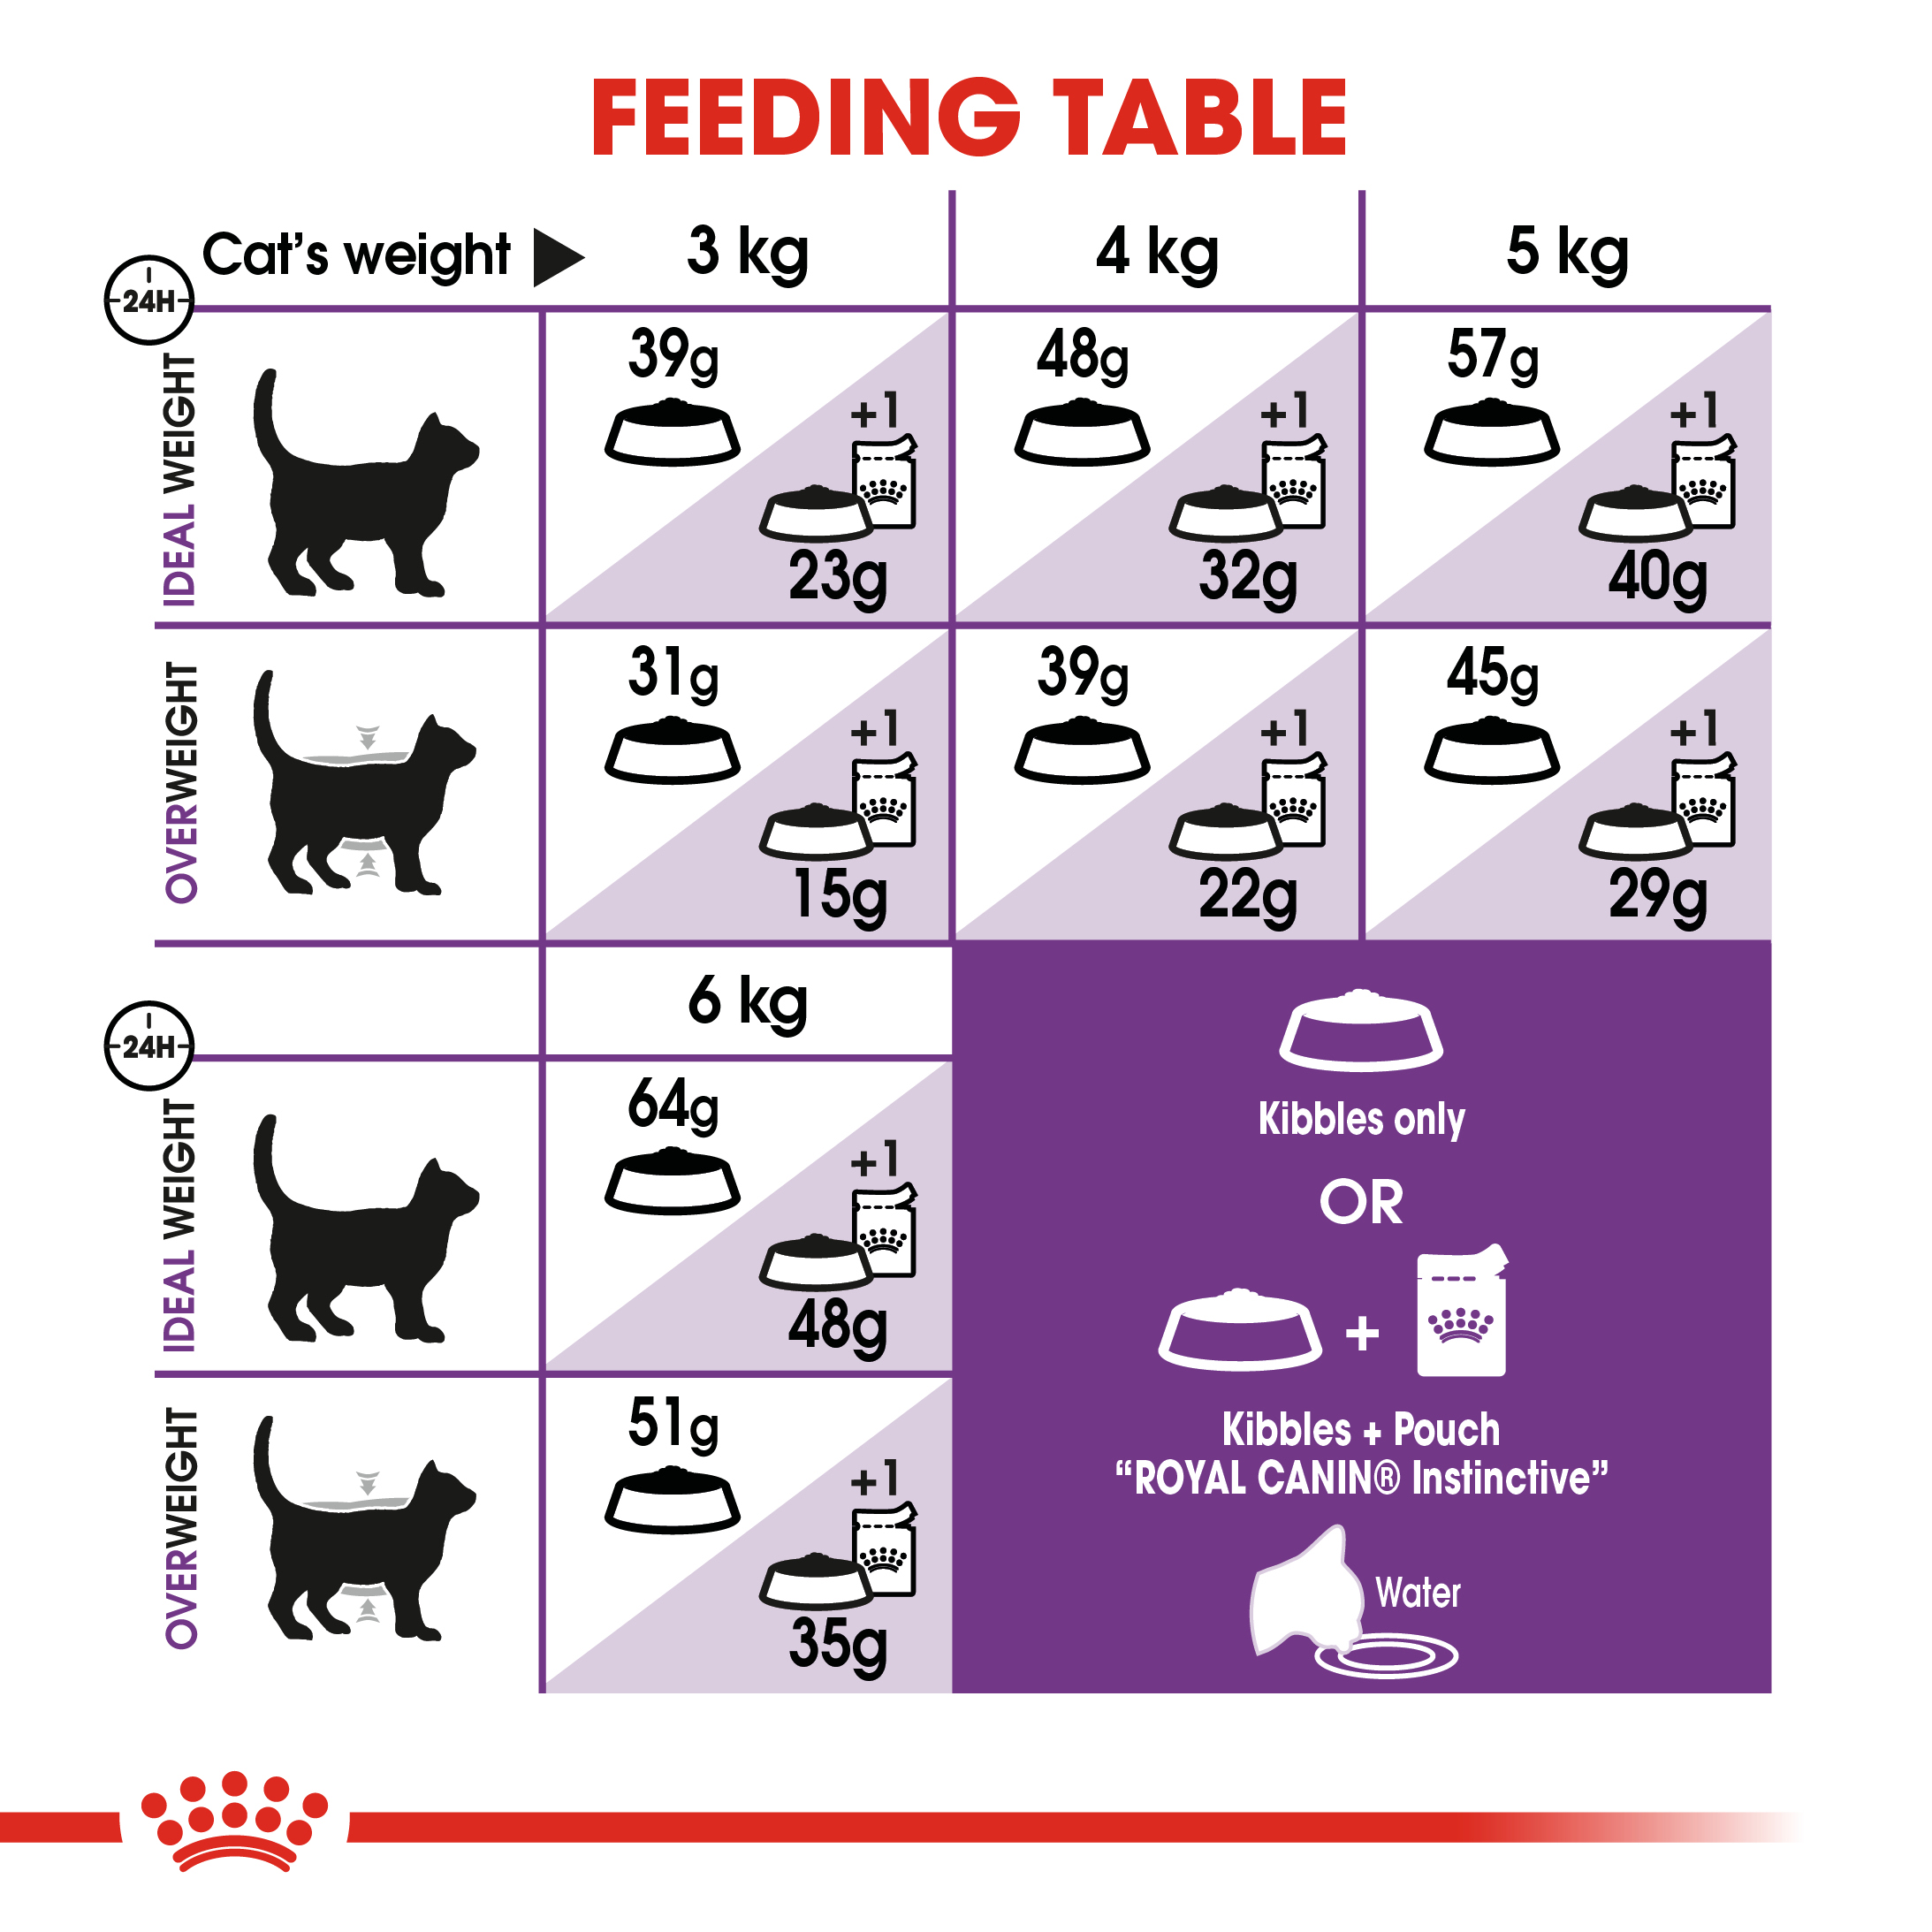 Royal Canin Sensible Adult Cat Food 2kg